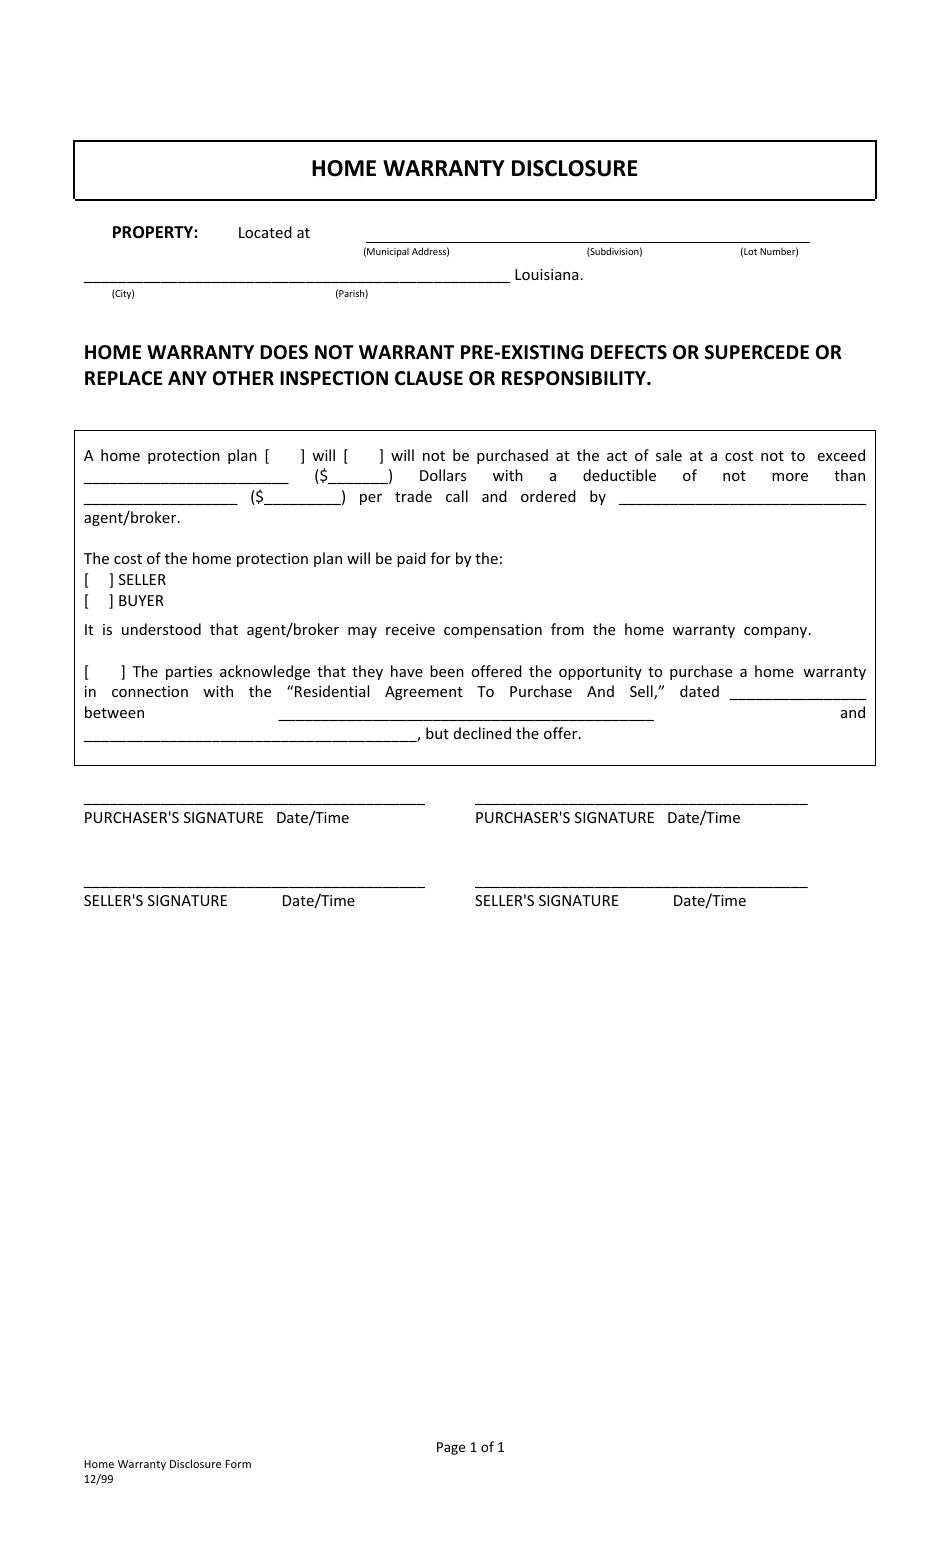 Home Warranty Disclosure Form - Louisiana, Page 1